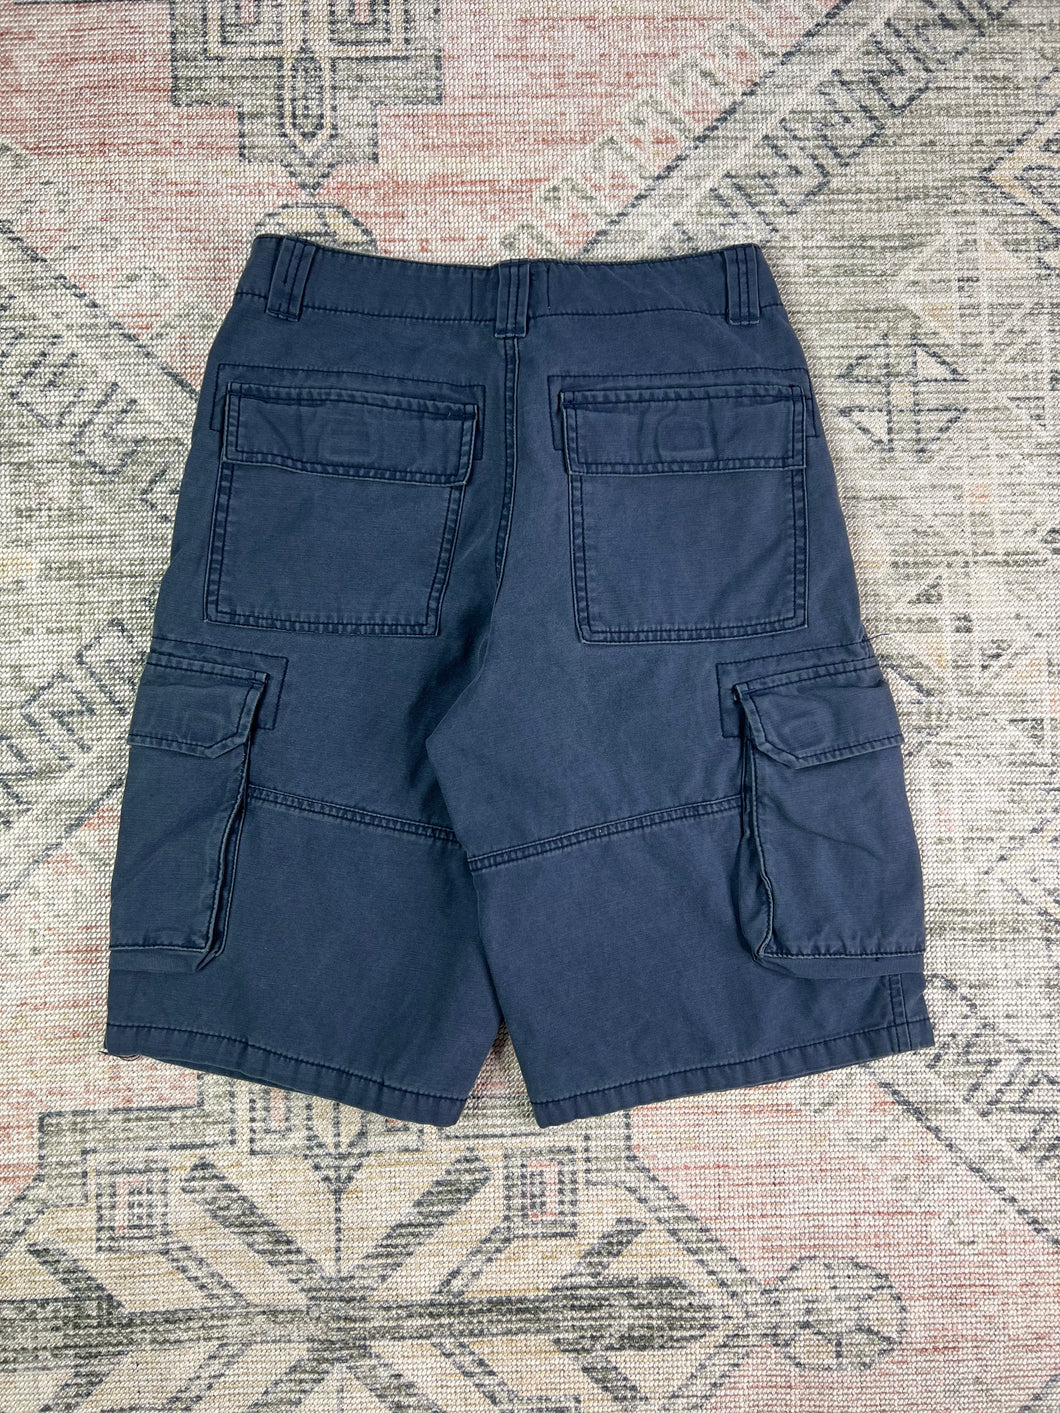 Y2K Old Navy Cargo Shorts (Womens 29)